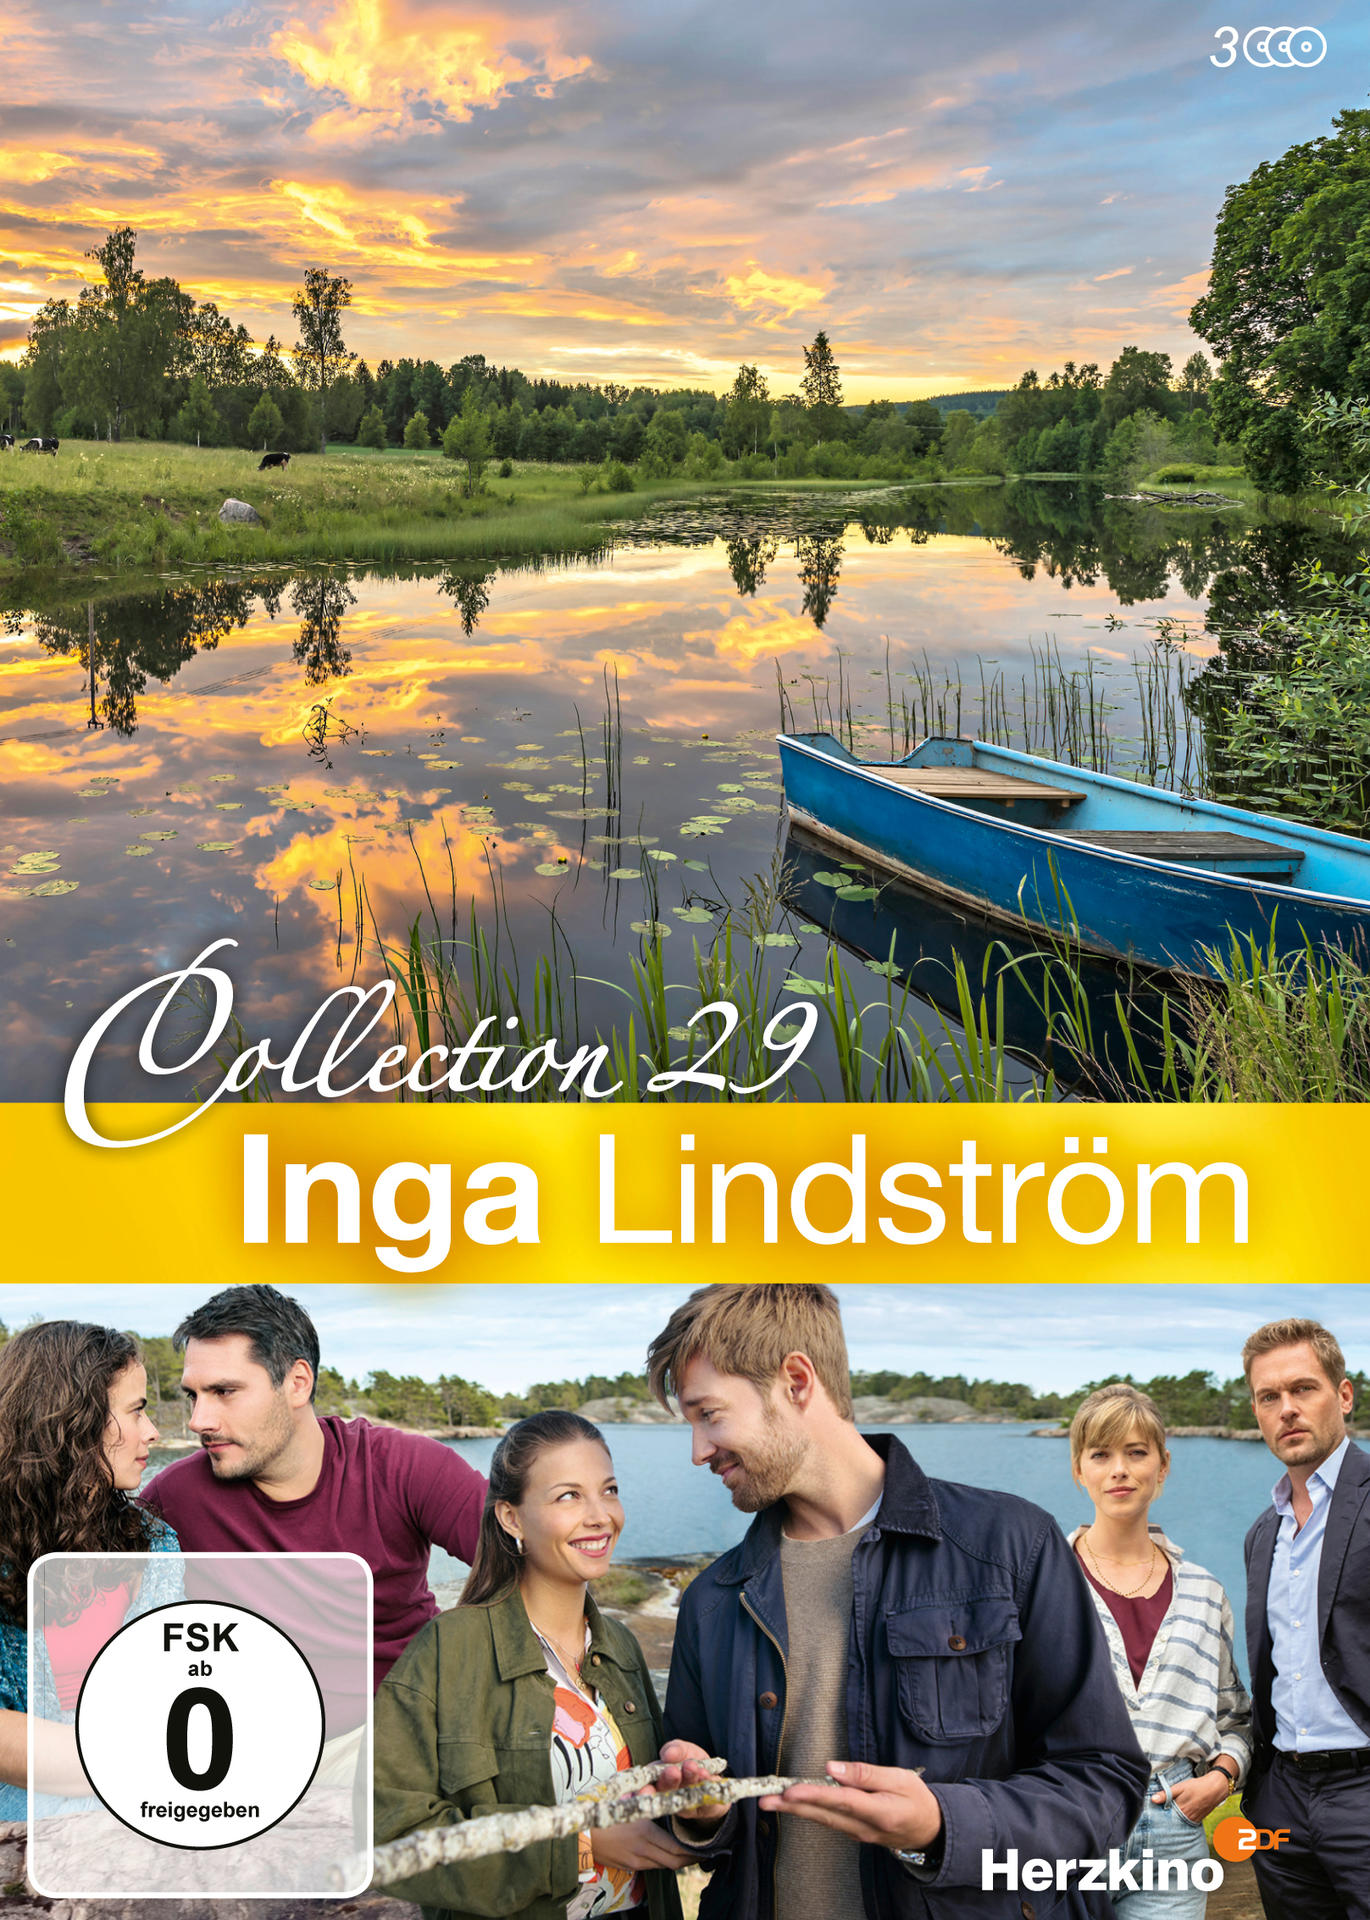 DVD Collection Lindström Inga 29